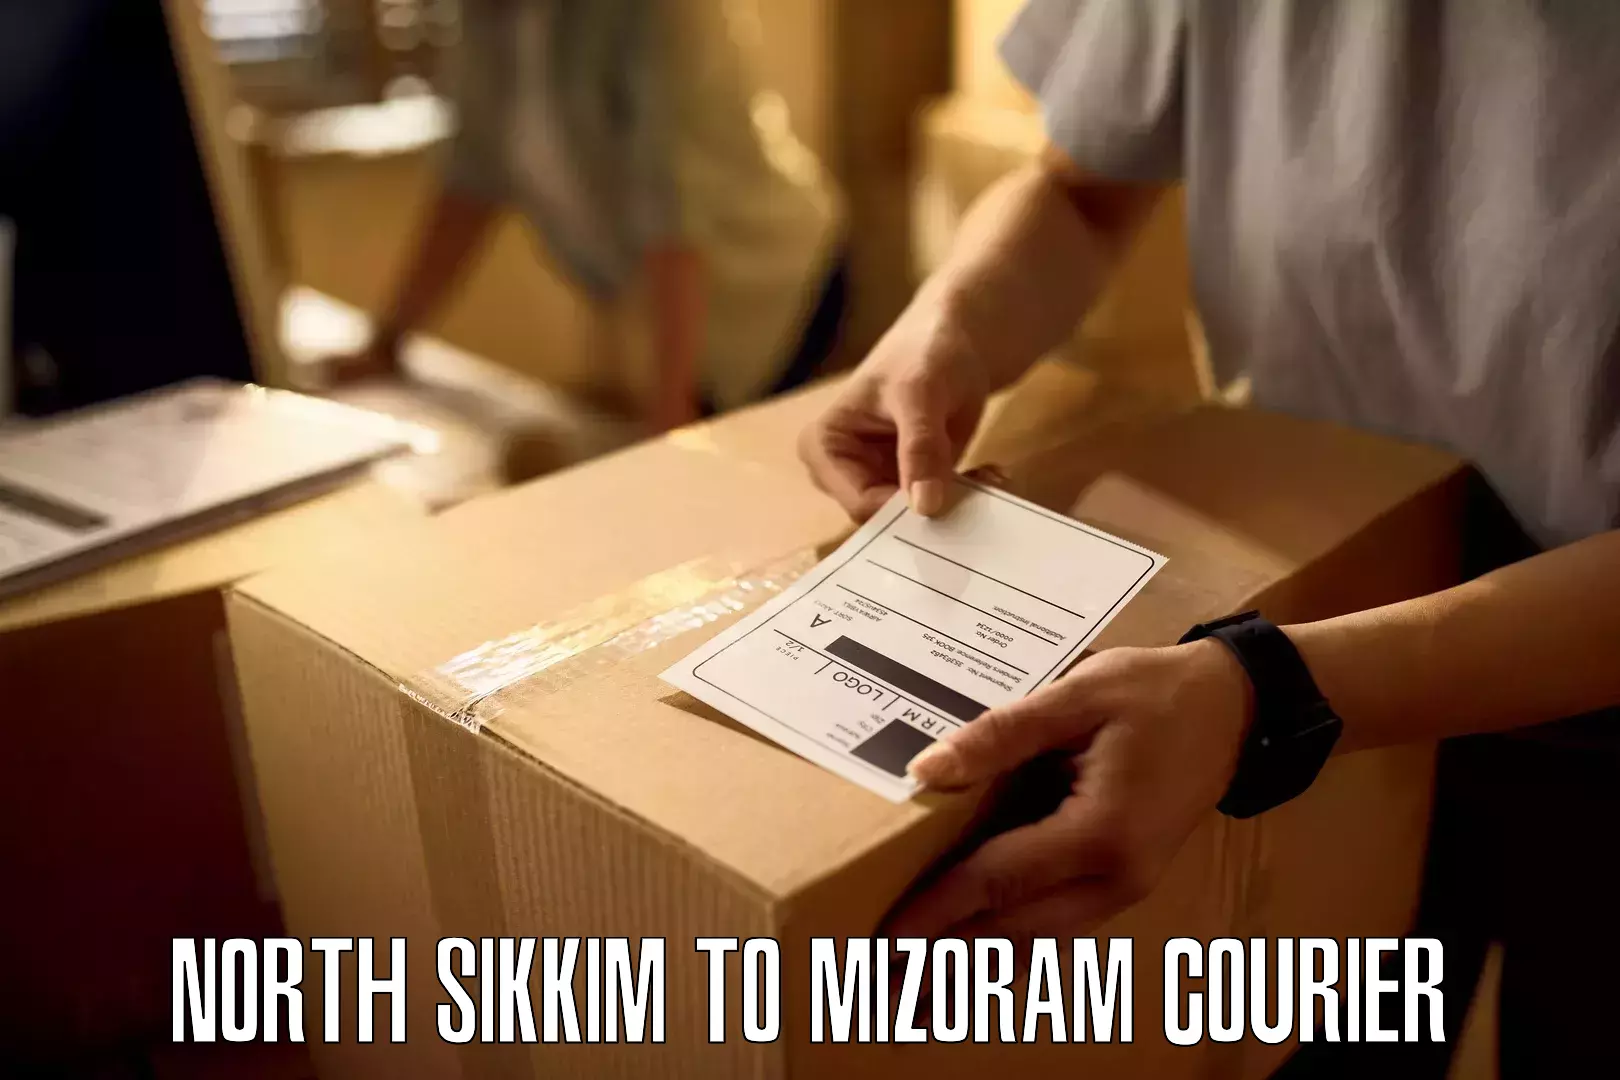 User-friendly courier app North Sikkim to Mizoram